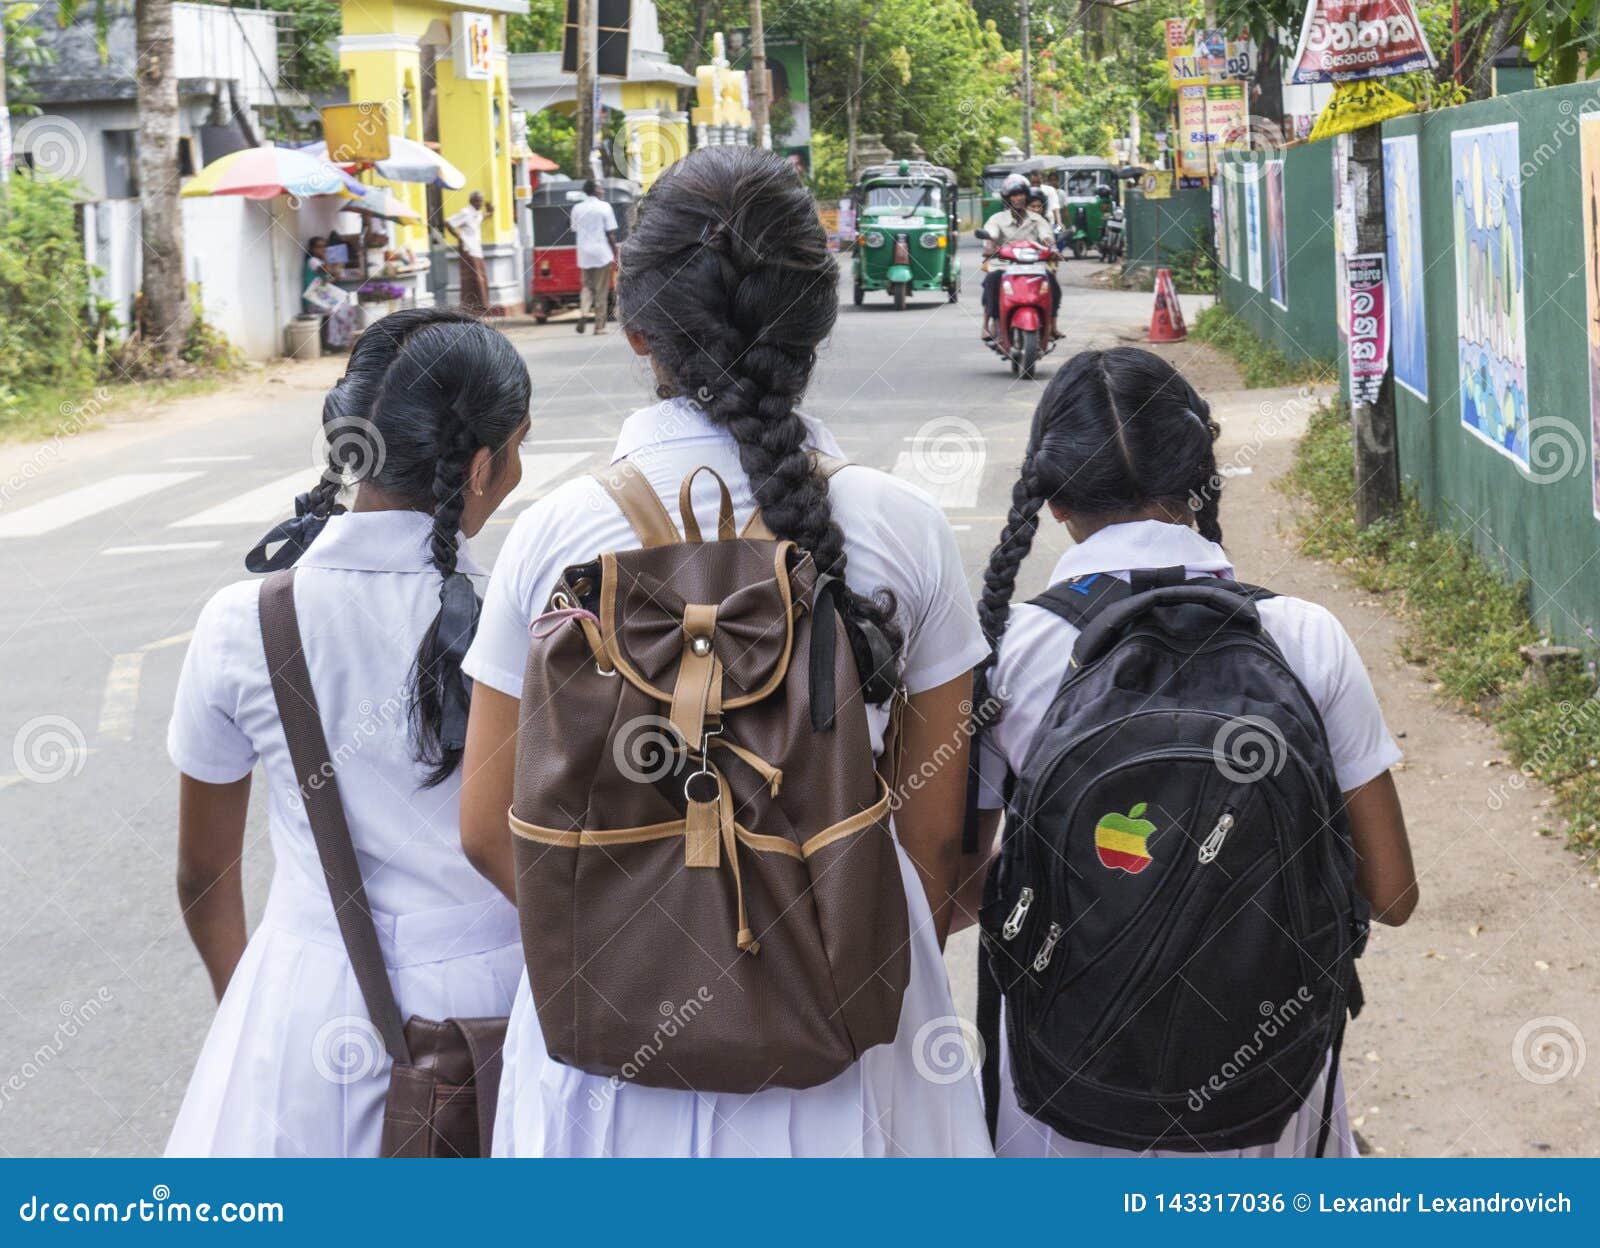 Sri Lankan schoolgirls share a light moment as they walk 